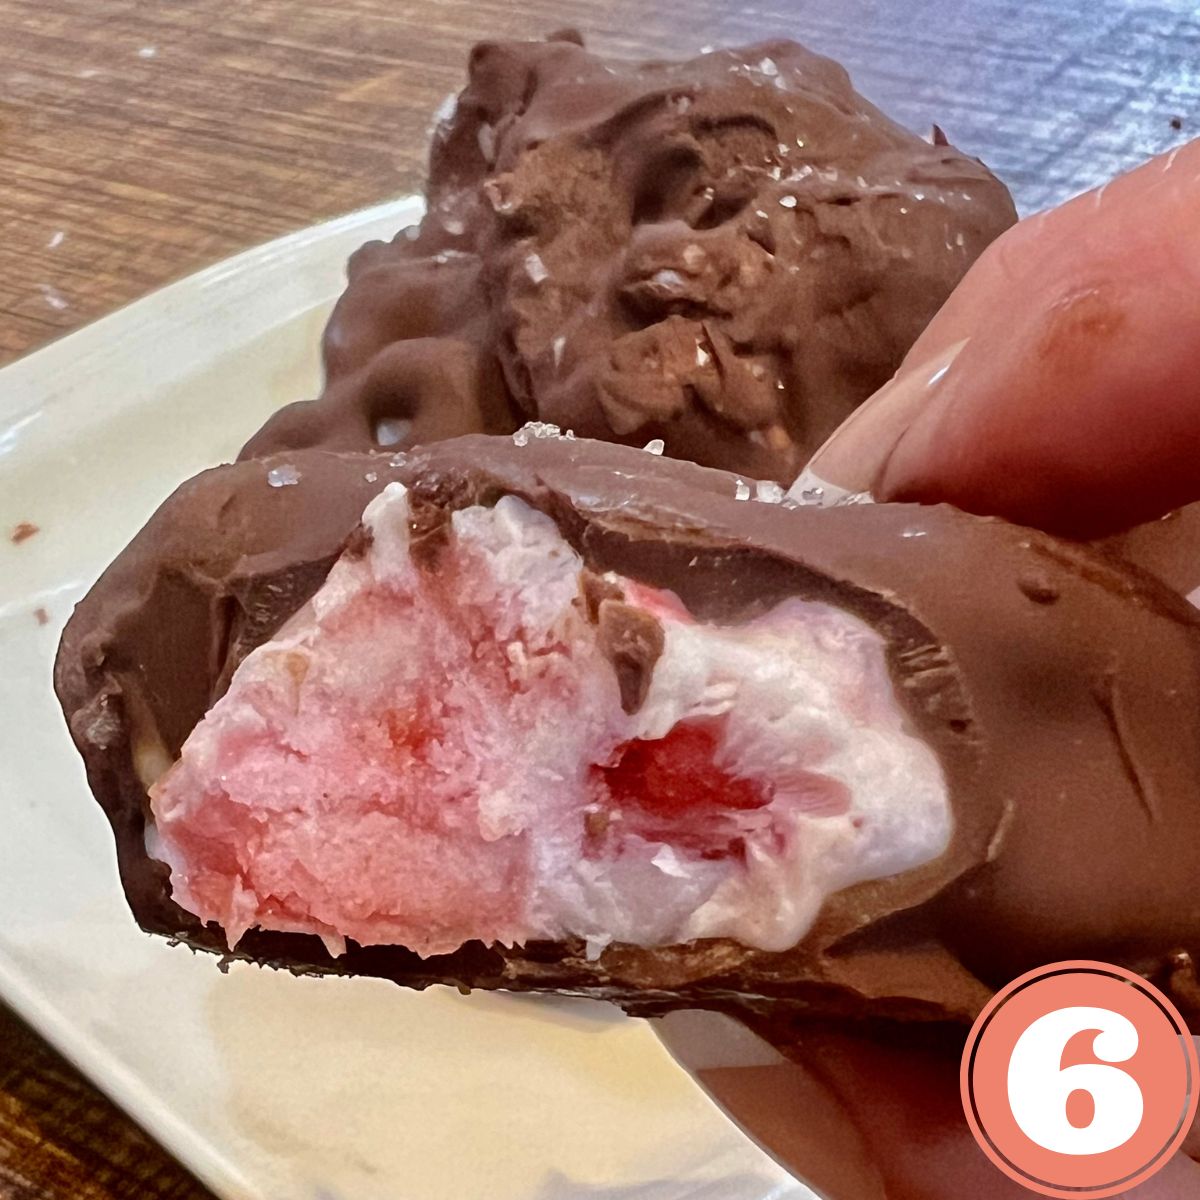 Chocolate covered frozen yogurt berry bar in a hand